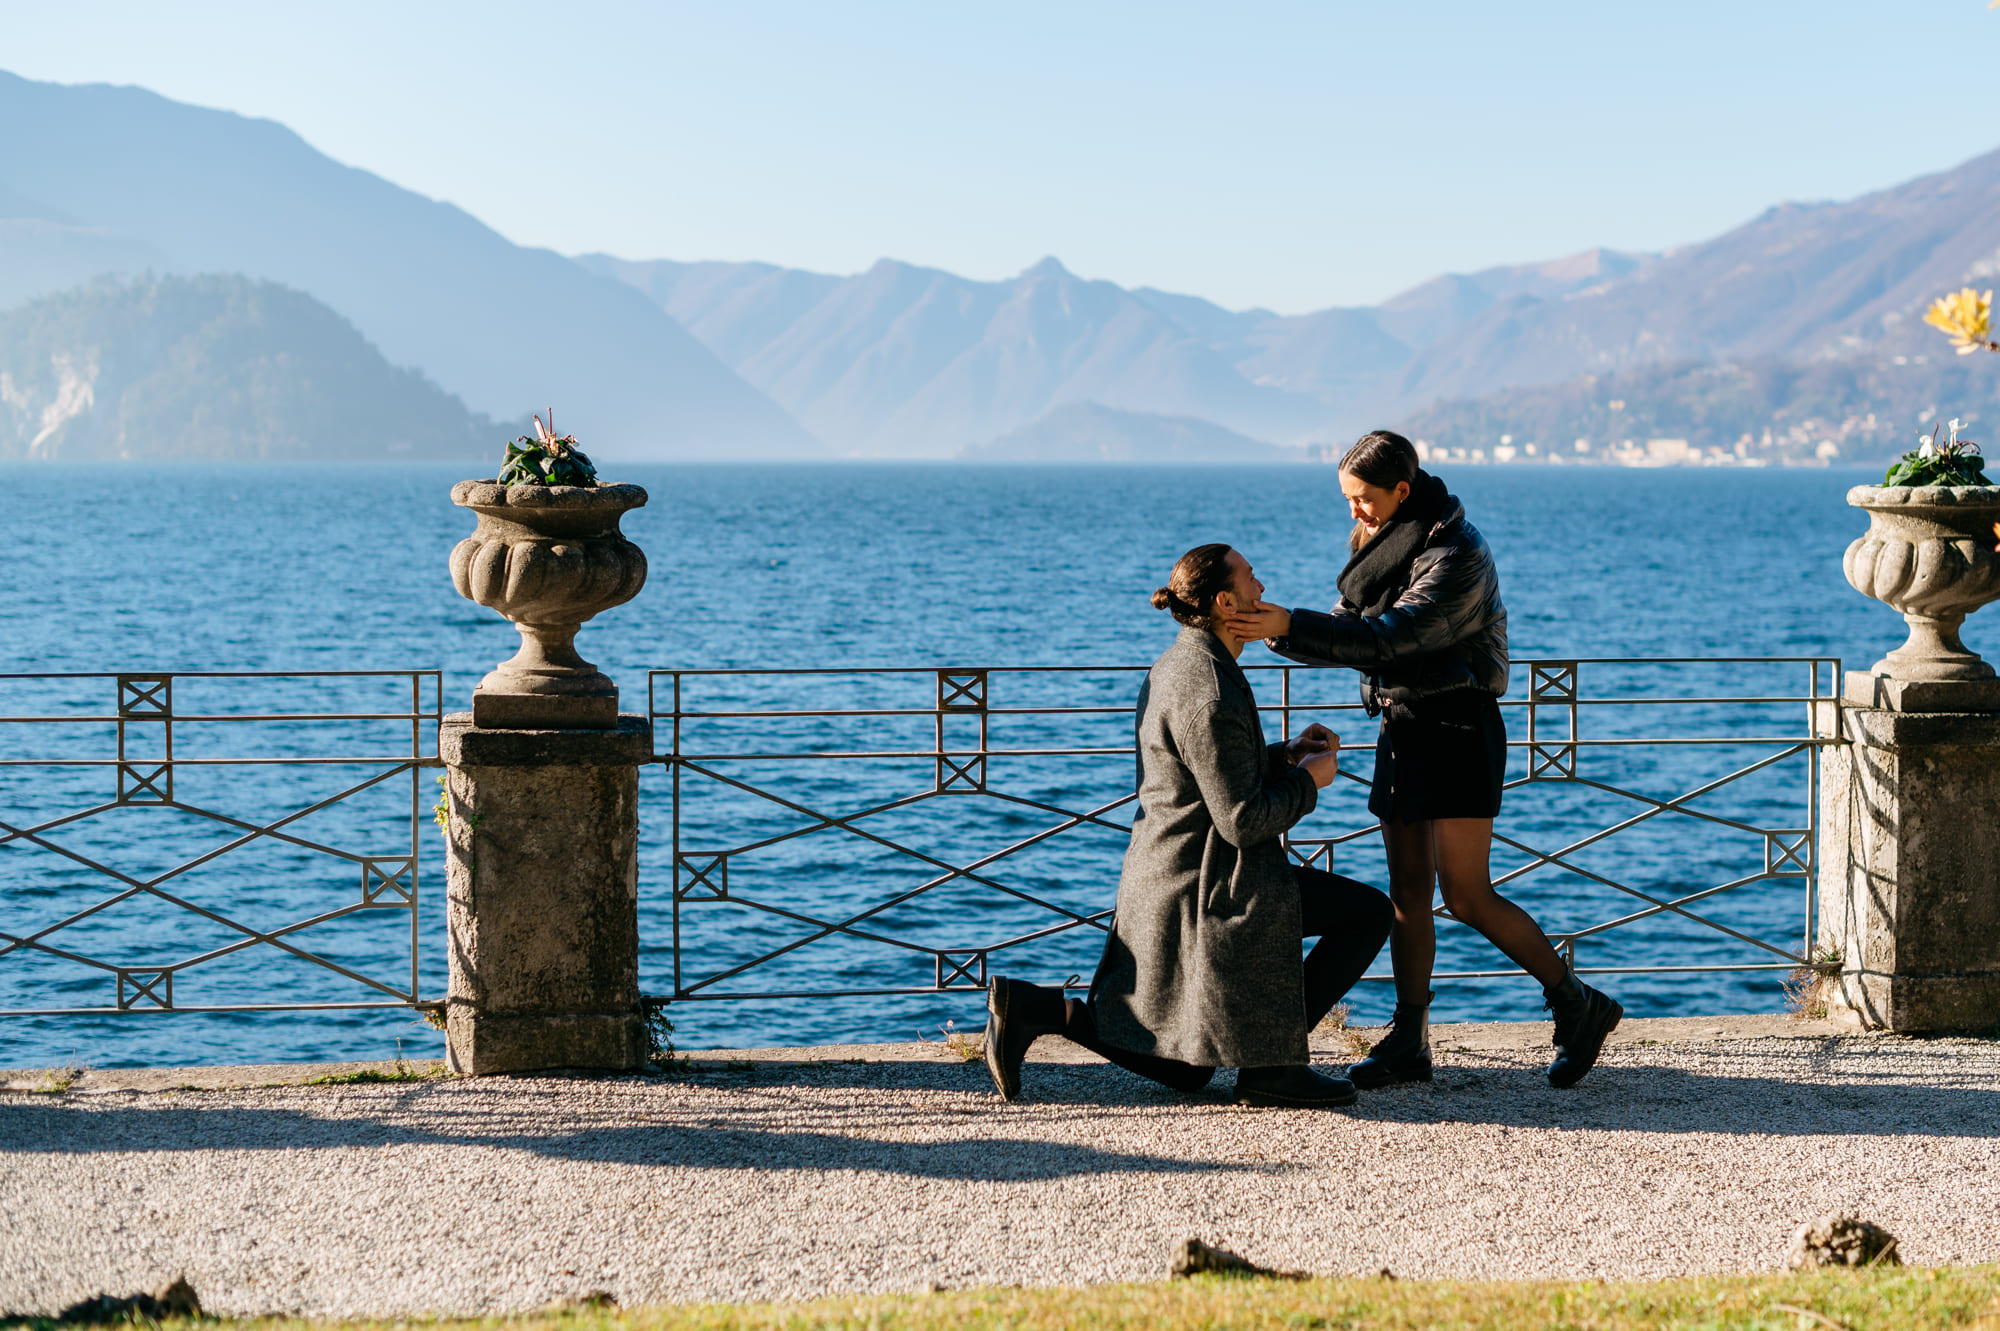 Lake Como wedding proposal